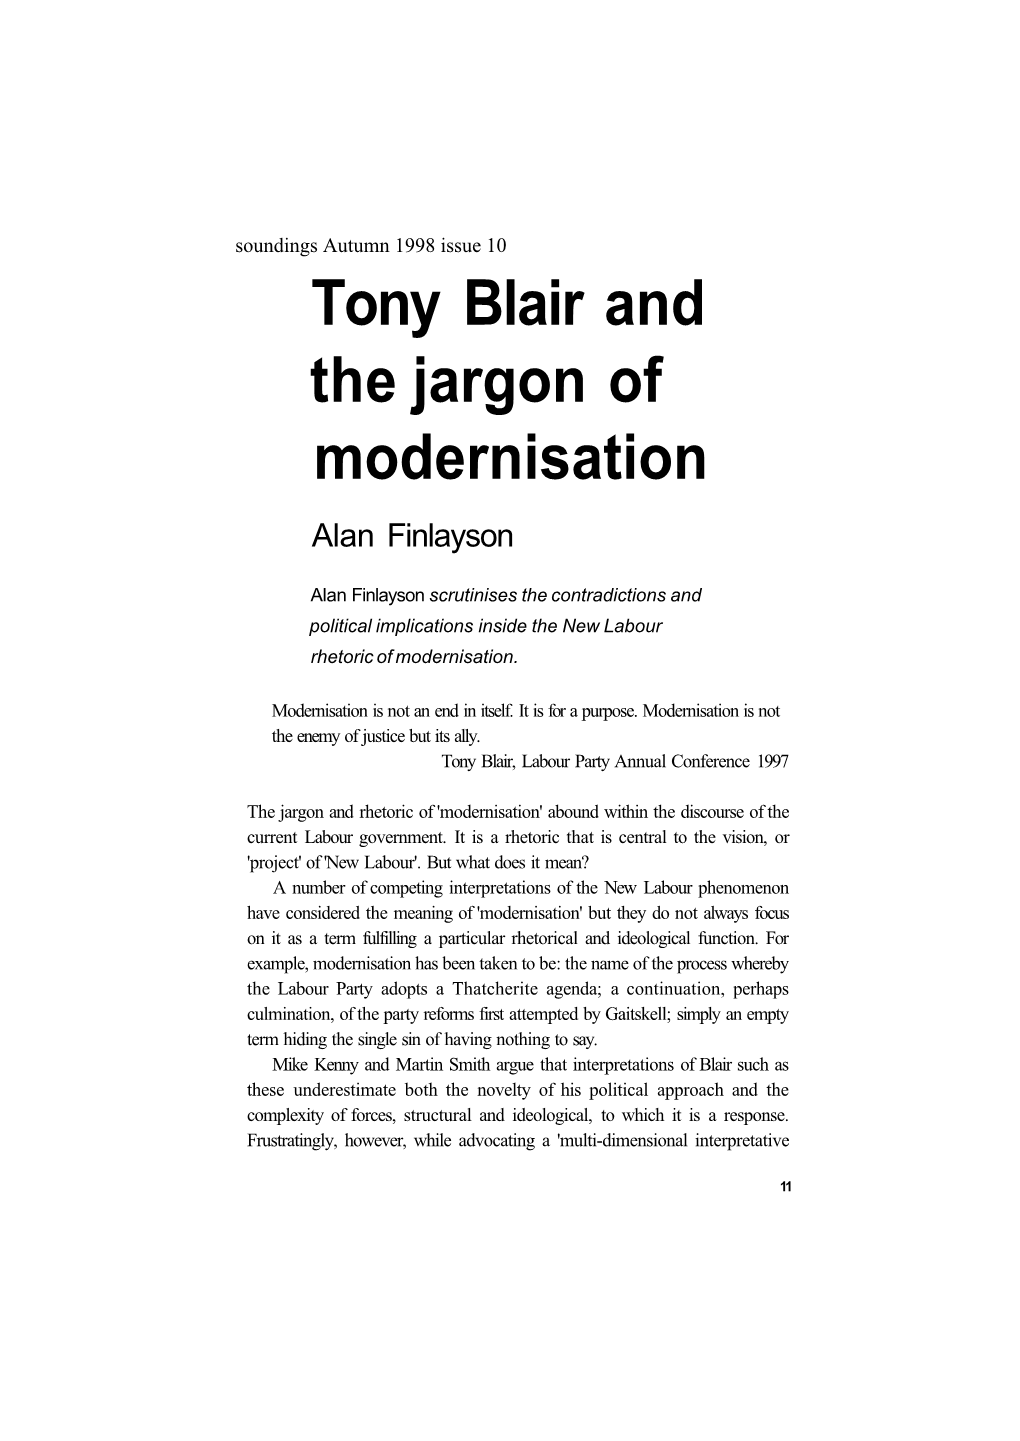 Tony Blair and the Jargon of Modernisation Alan Finlayson